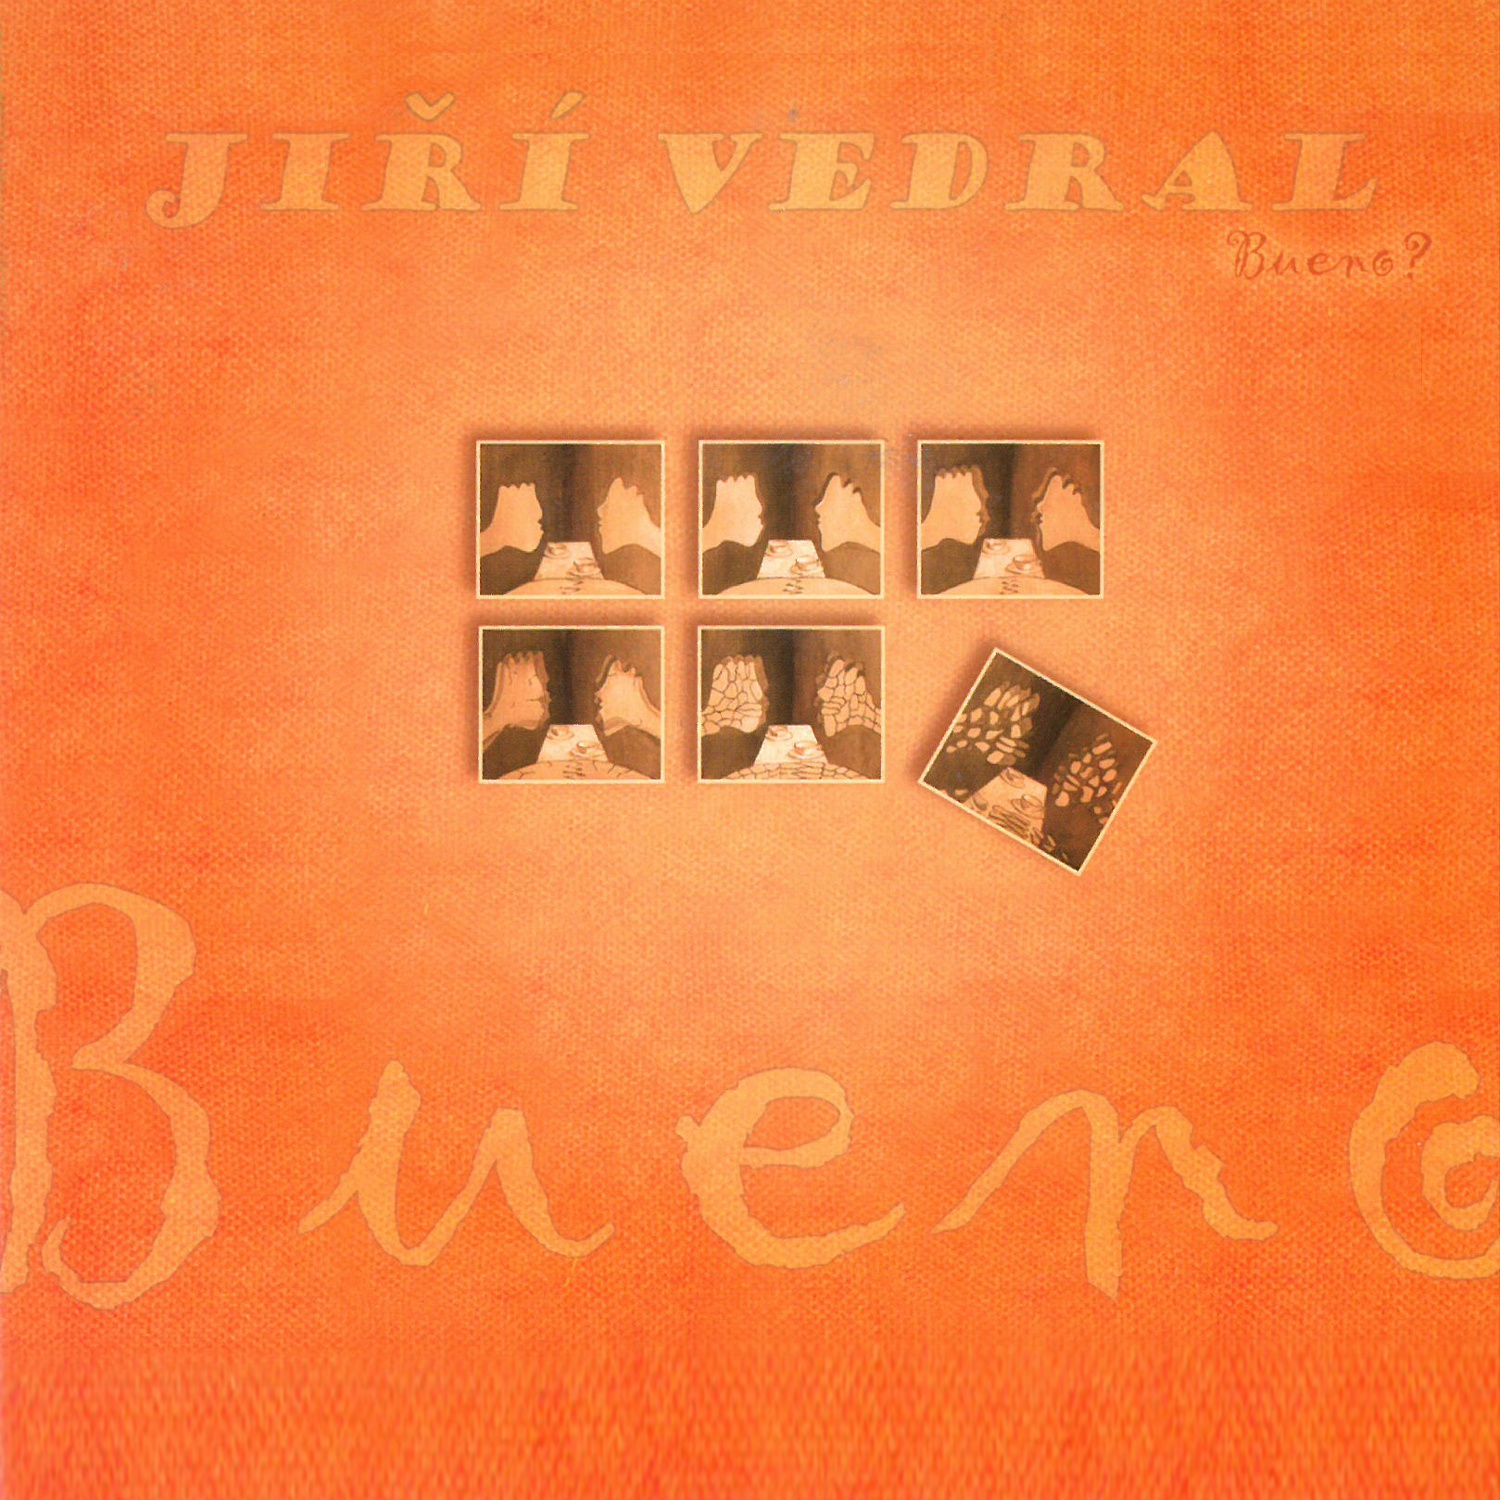 CD Shop - JIRI VEDRAL BUENO